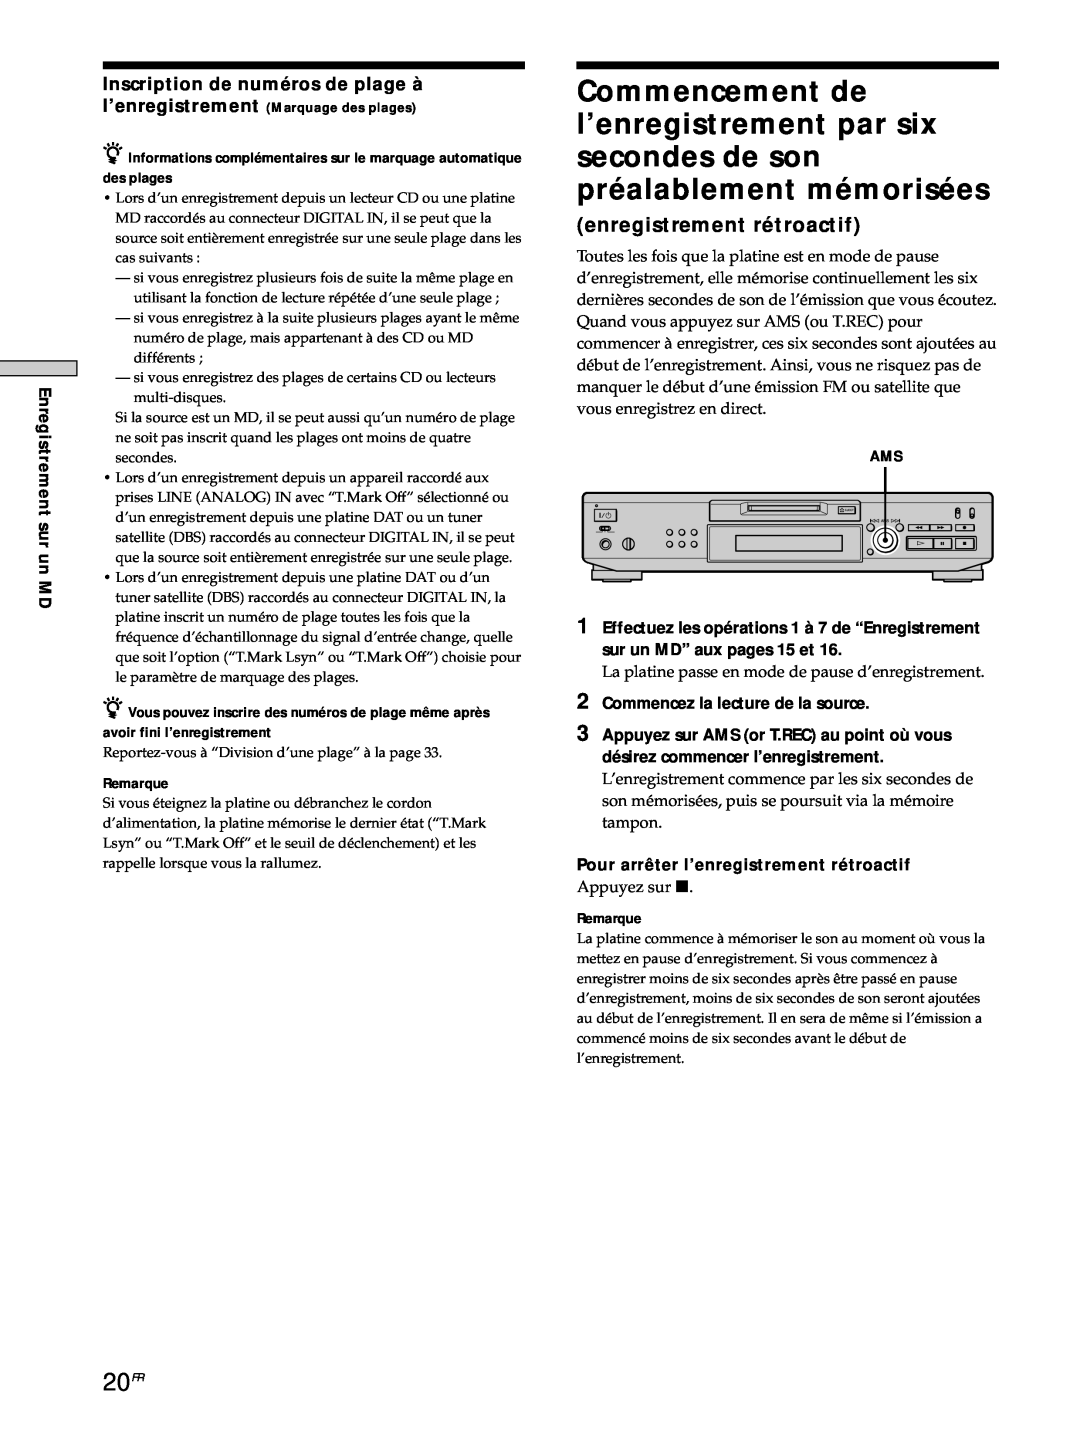 Sony MDS-JE530 manual 20FR, enregistrement rétroactif 